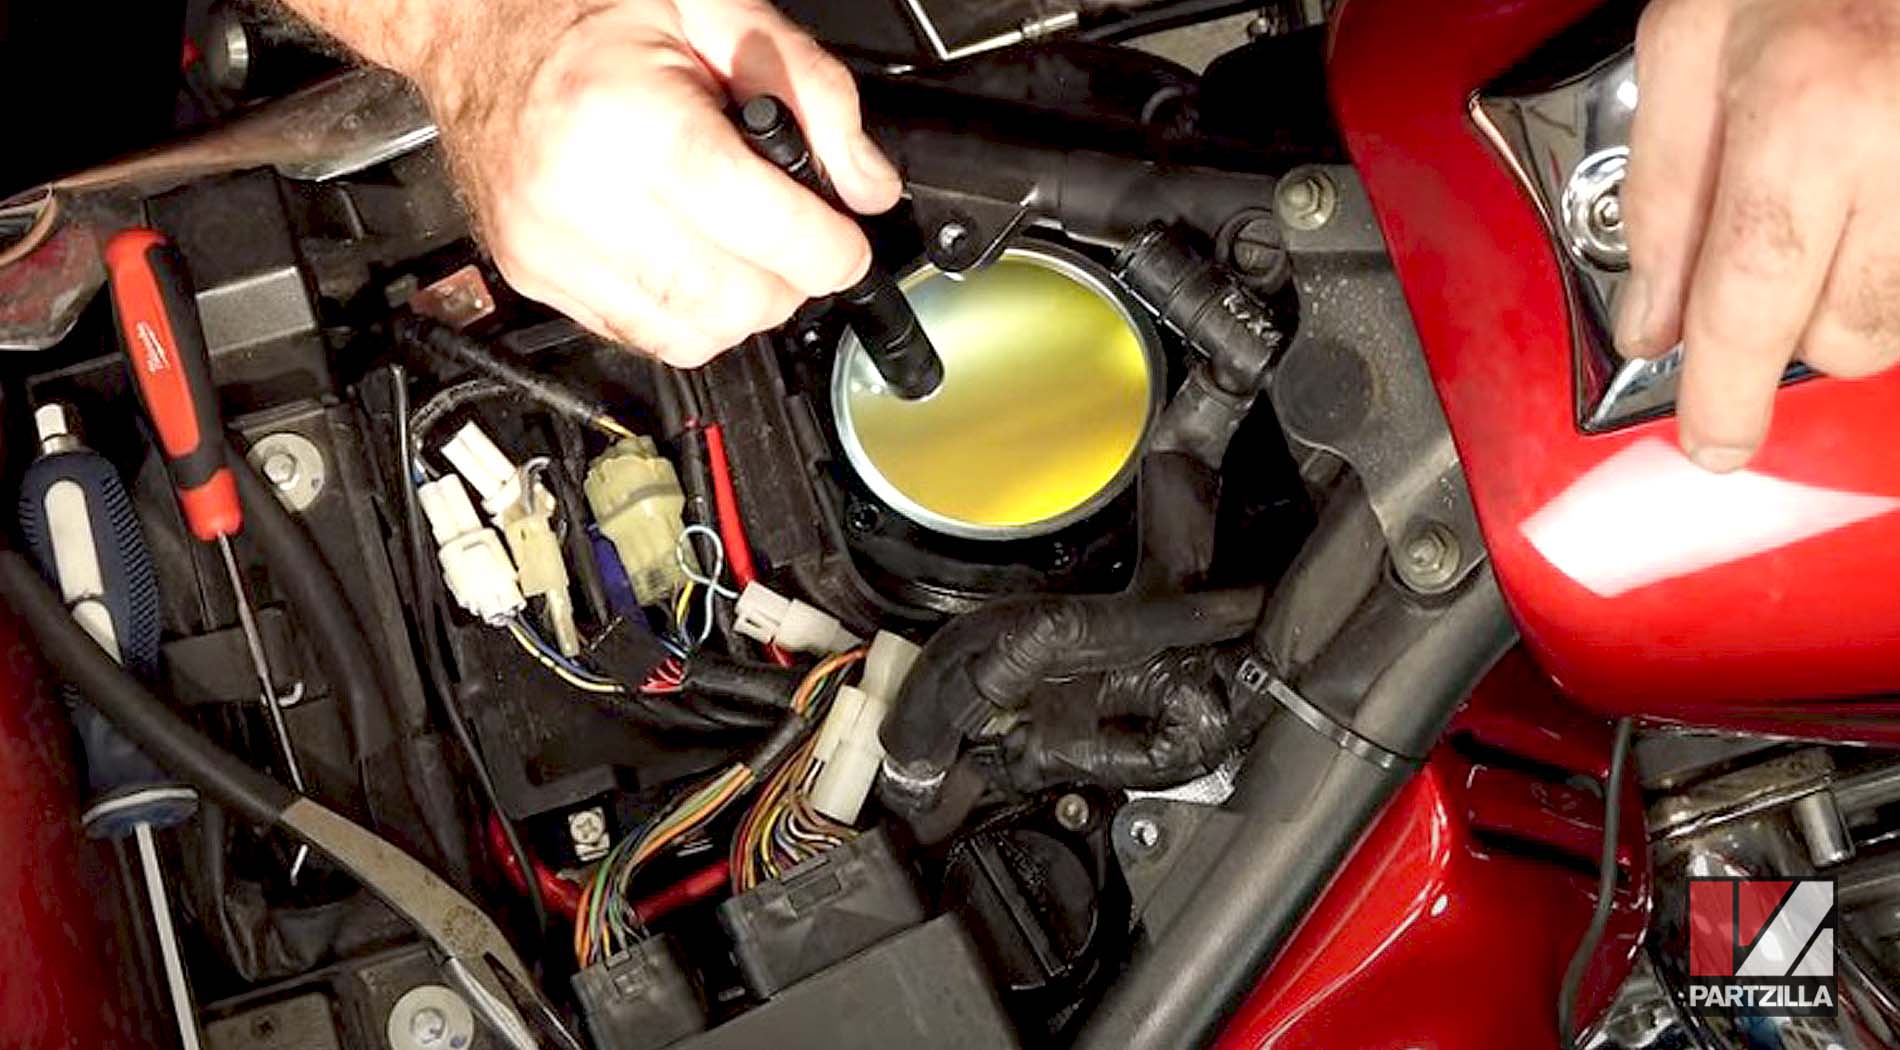 Yamaha Raider fuel pump change inspection